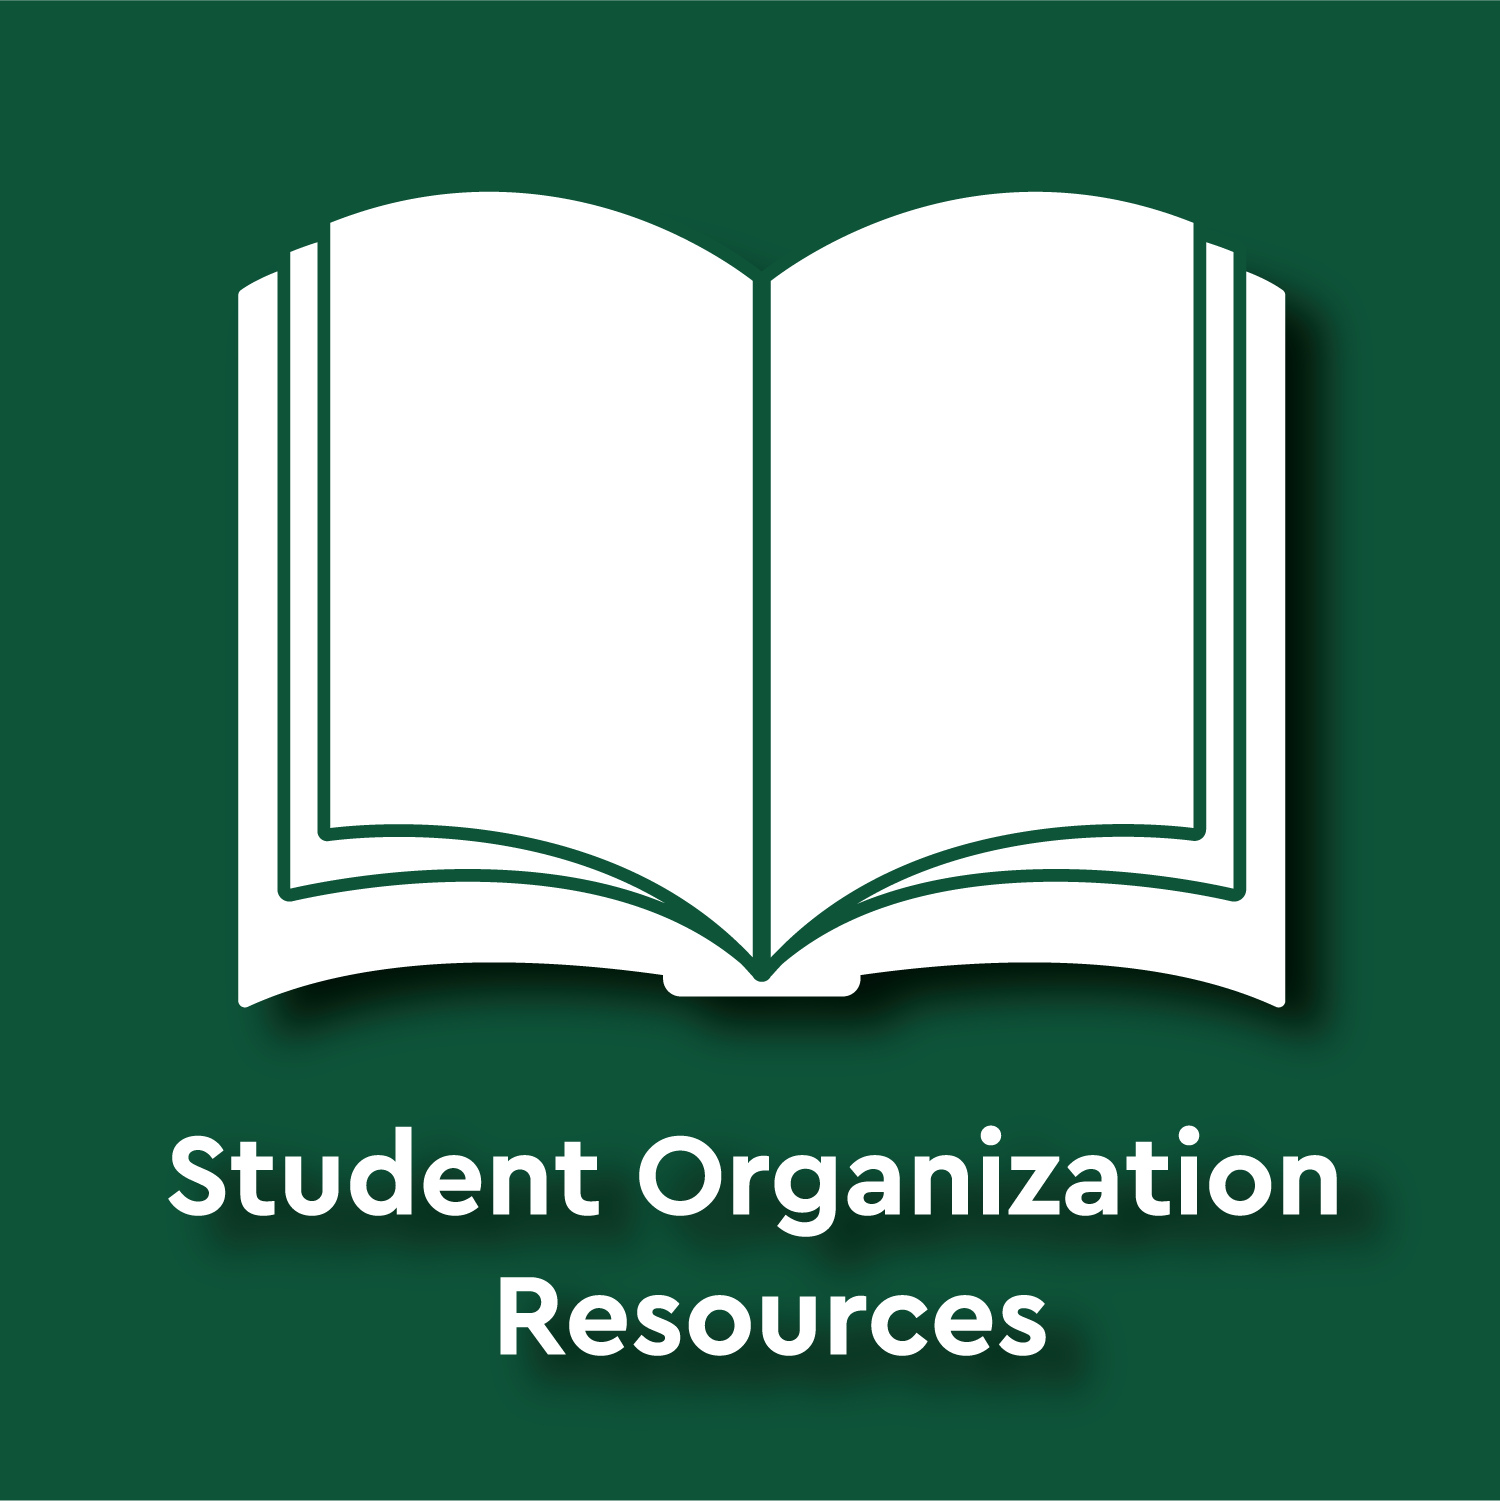 Student Organization Resources